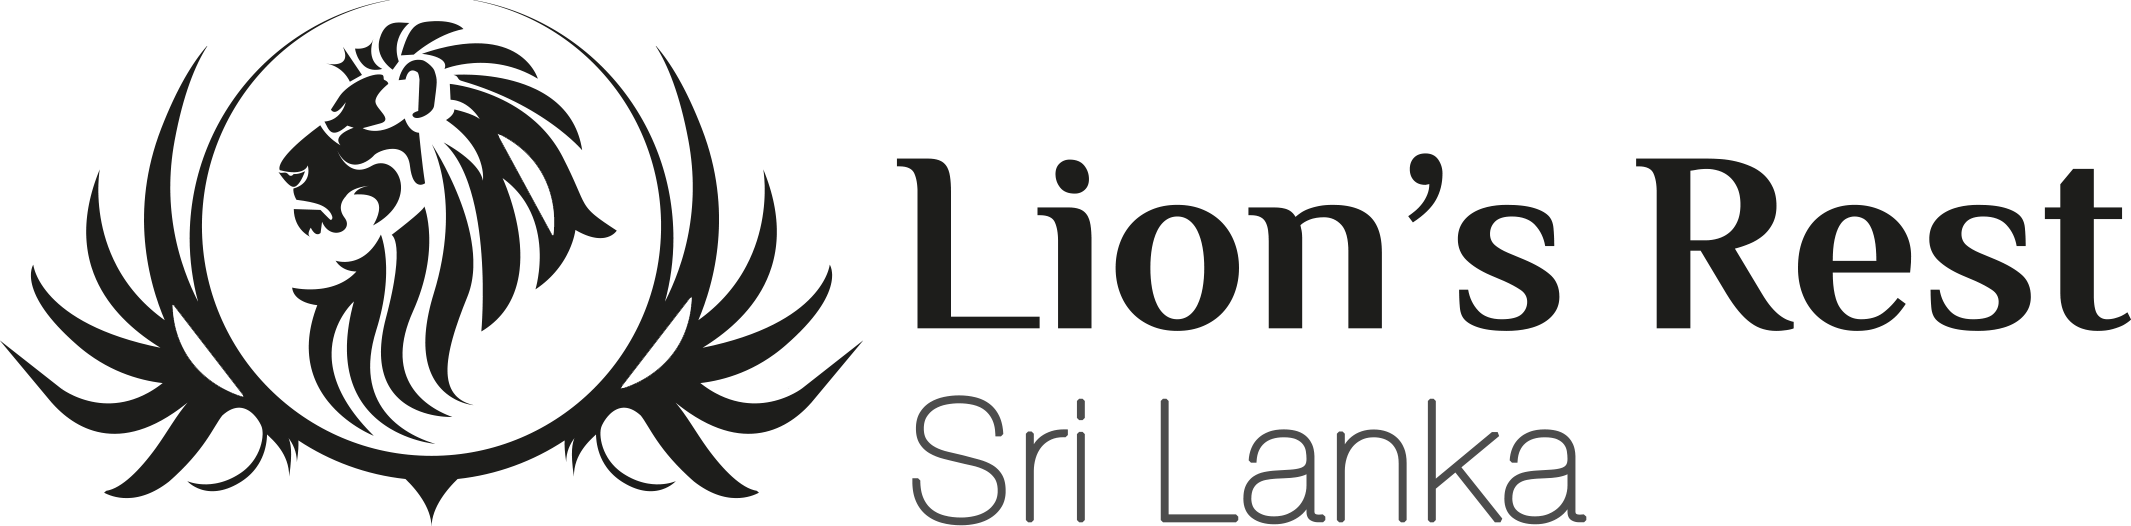 Lion Hotel Logo - Lion's Rest Surf Hotel, Sri Lanka